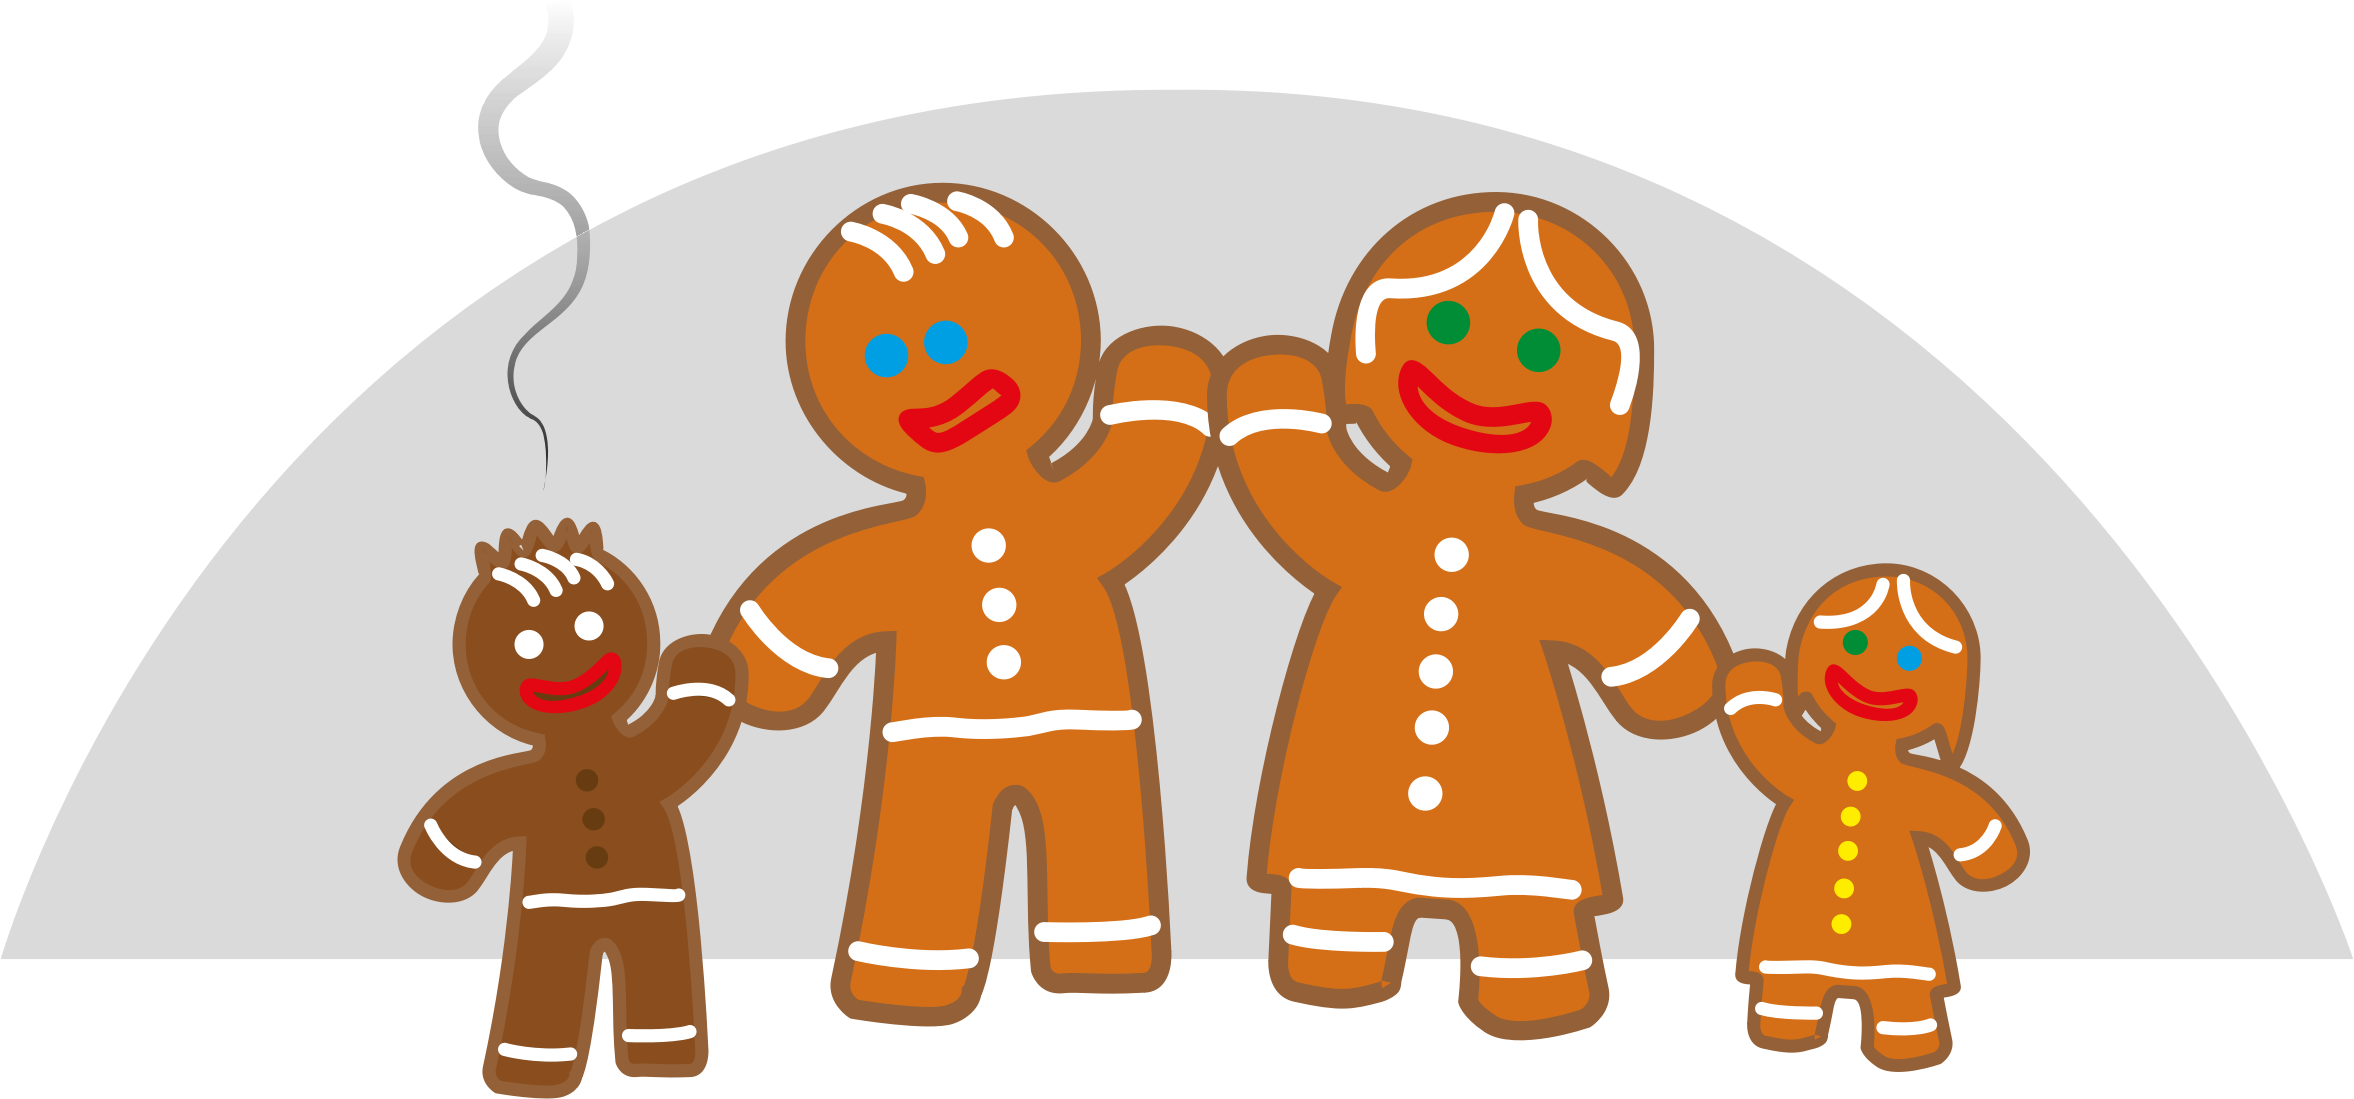 Family life jokingart com. Gingerbread clipart big